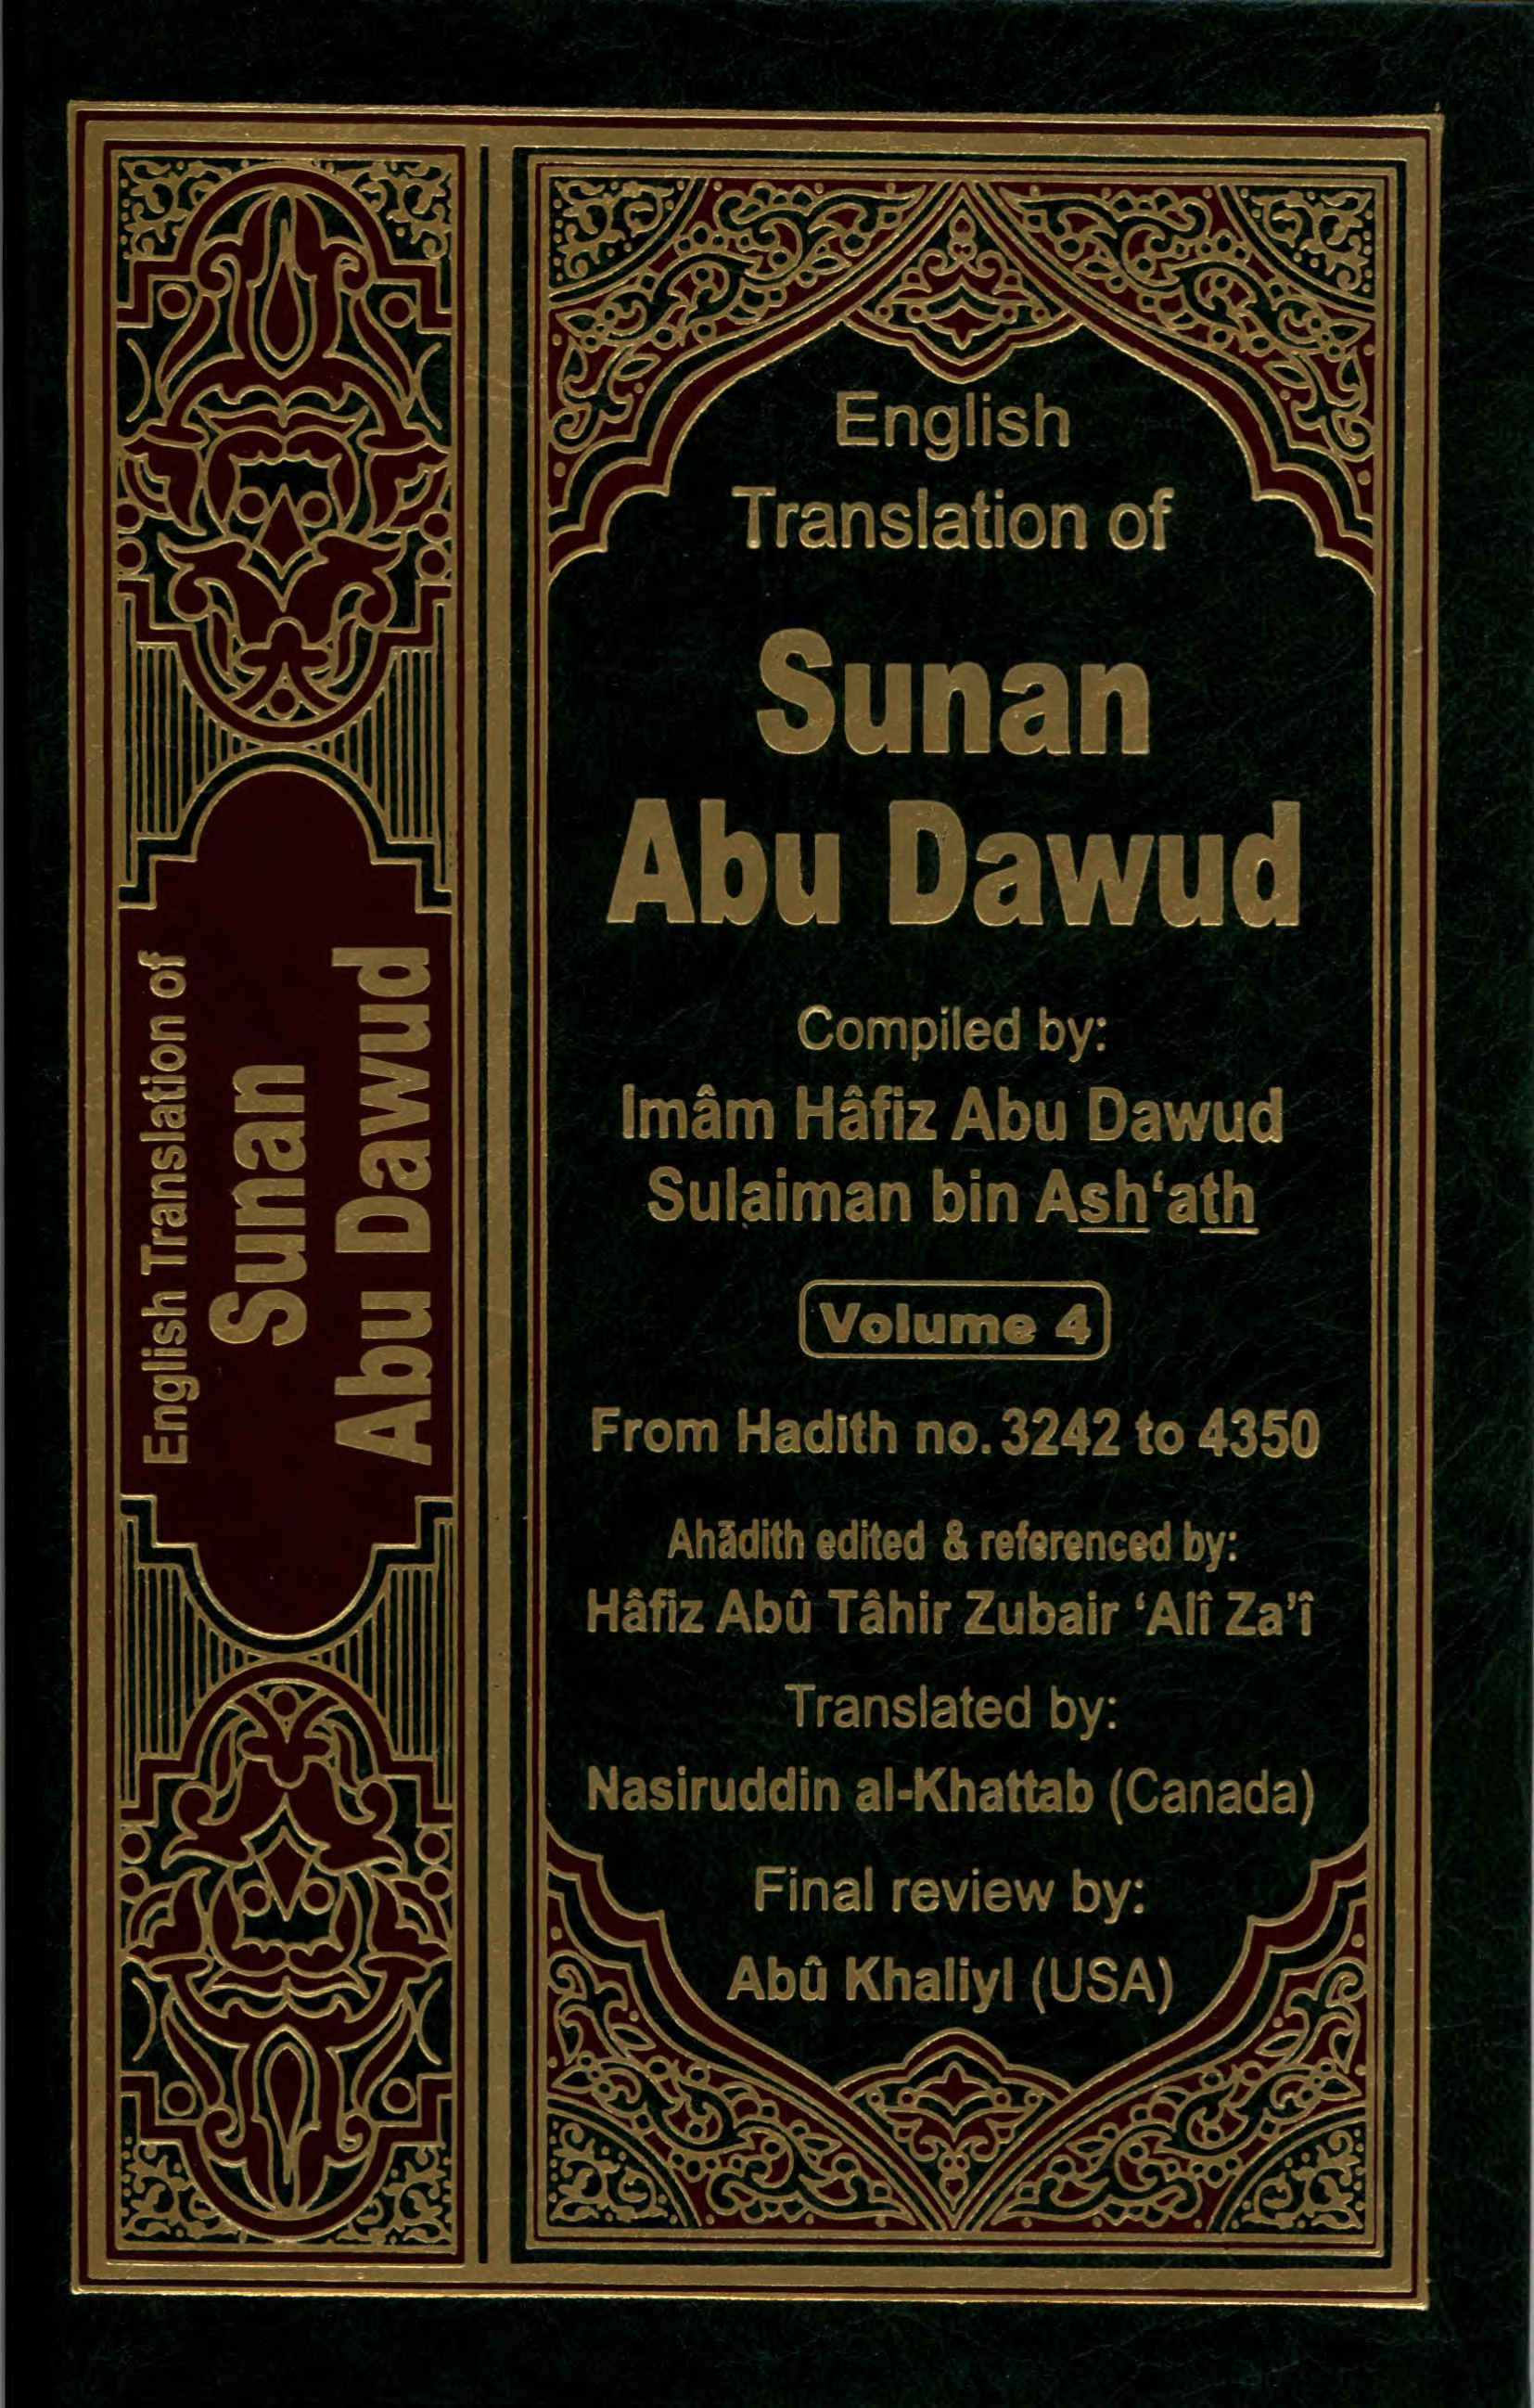 English Translation of Sunan Abu Dawud Volume 4 (from hadith 3242 to 4350)